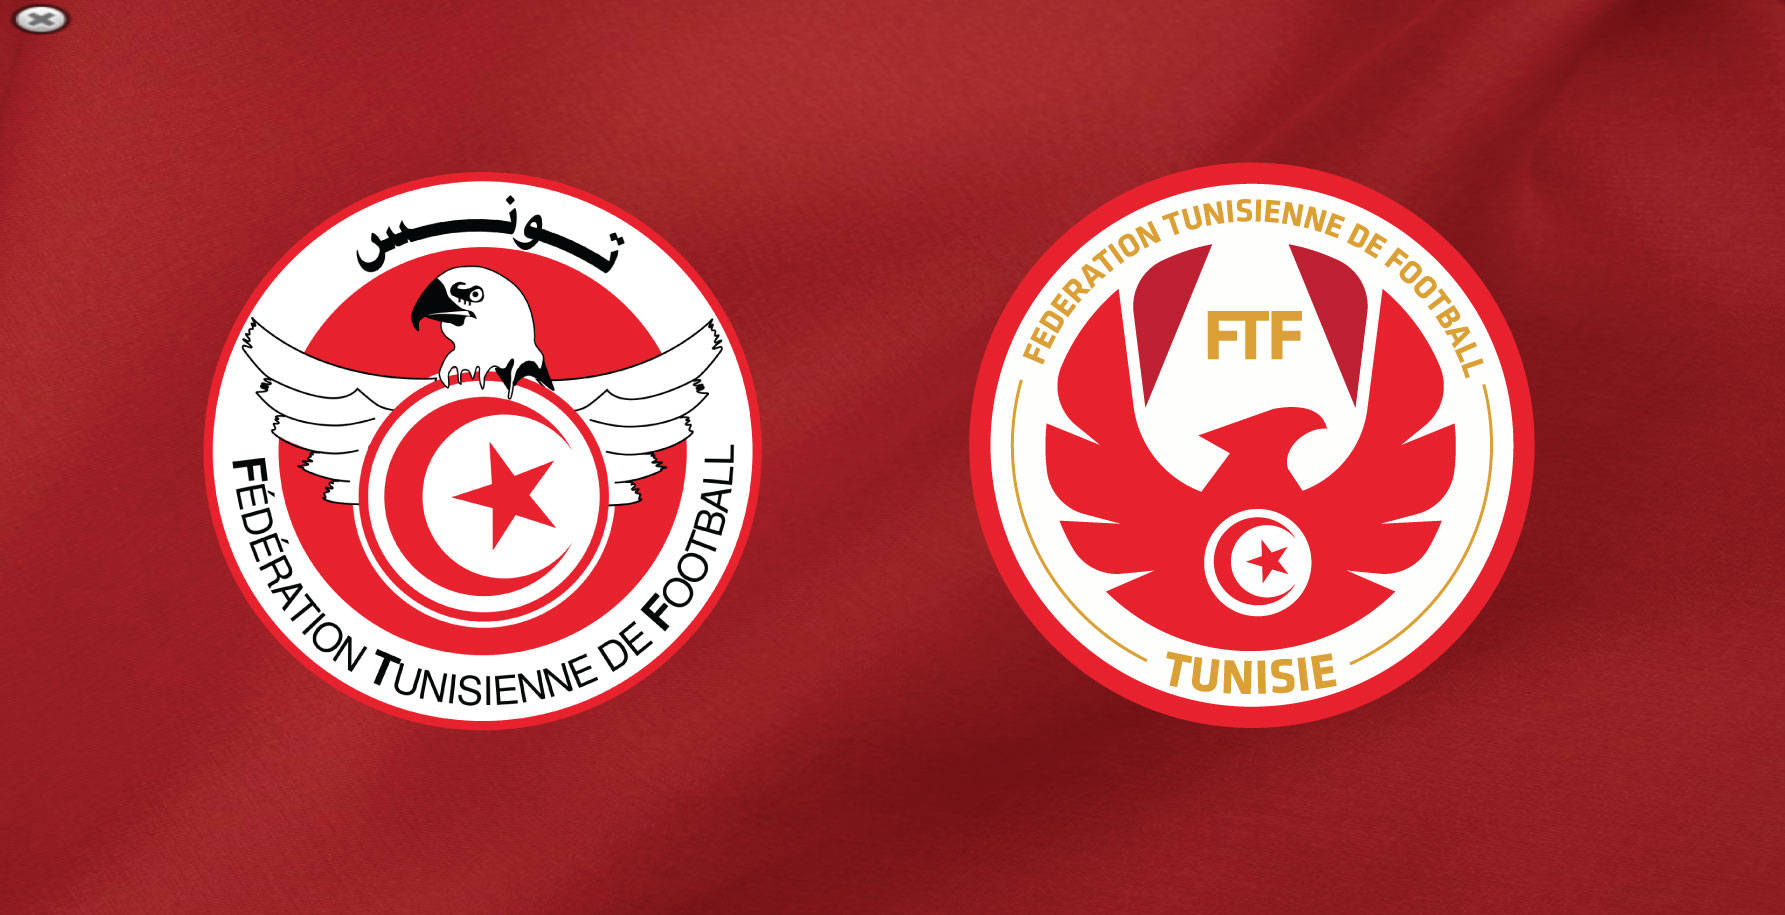 Tunisia National Football Team Logos